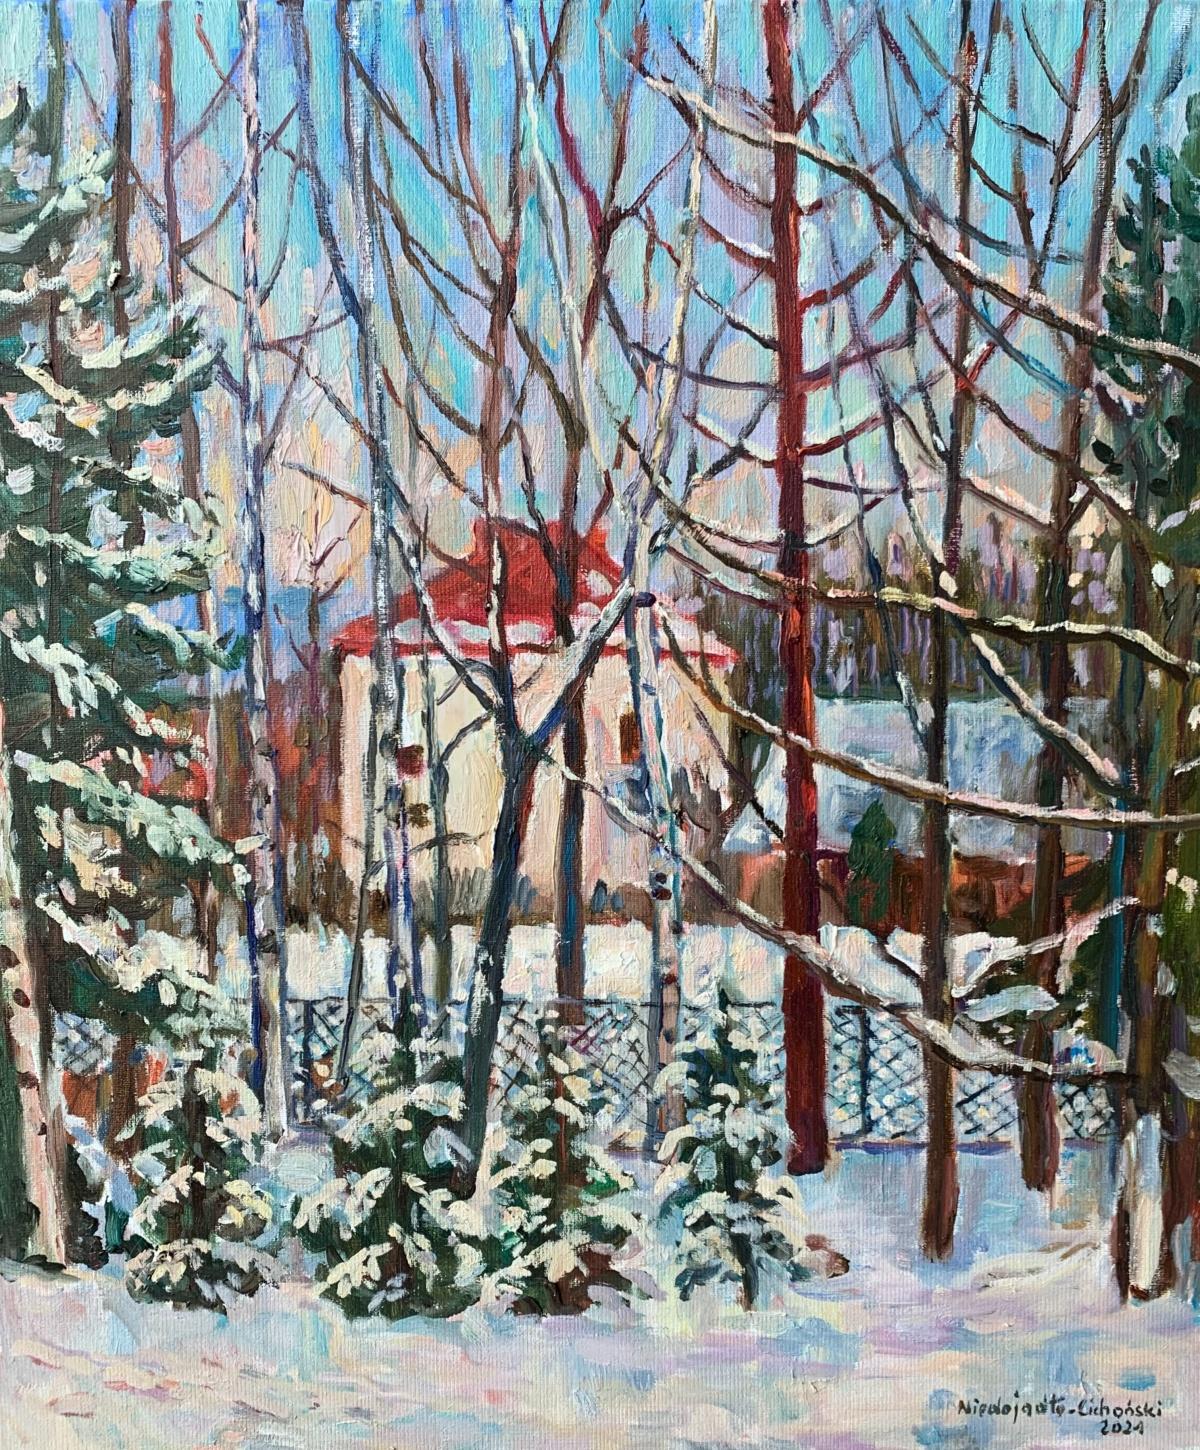 Marek Niedojadło Landscape Painting - In the winter sun - Oil painting, Colourful, Vertcal, Trees